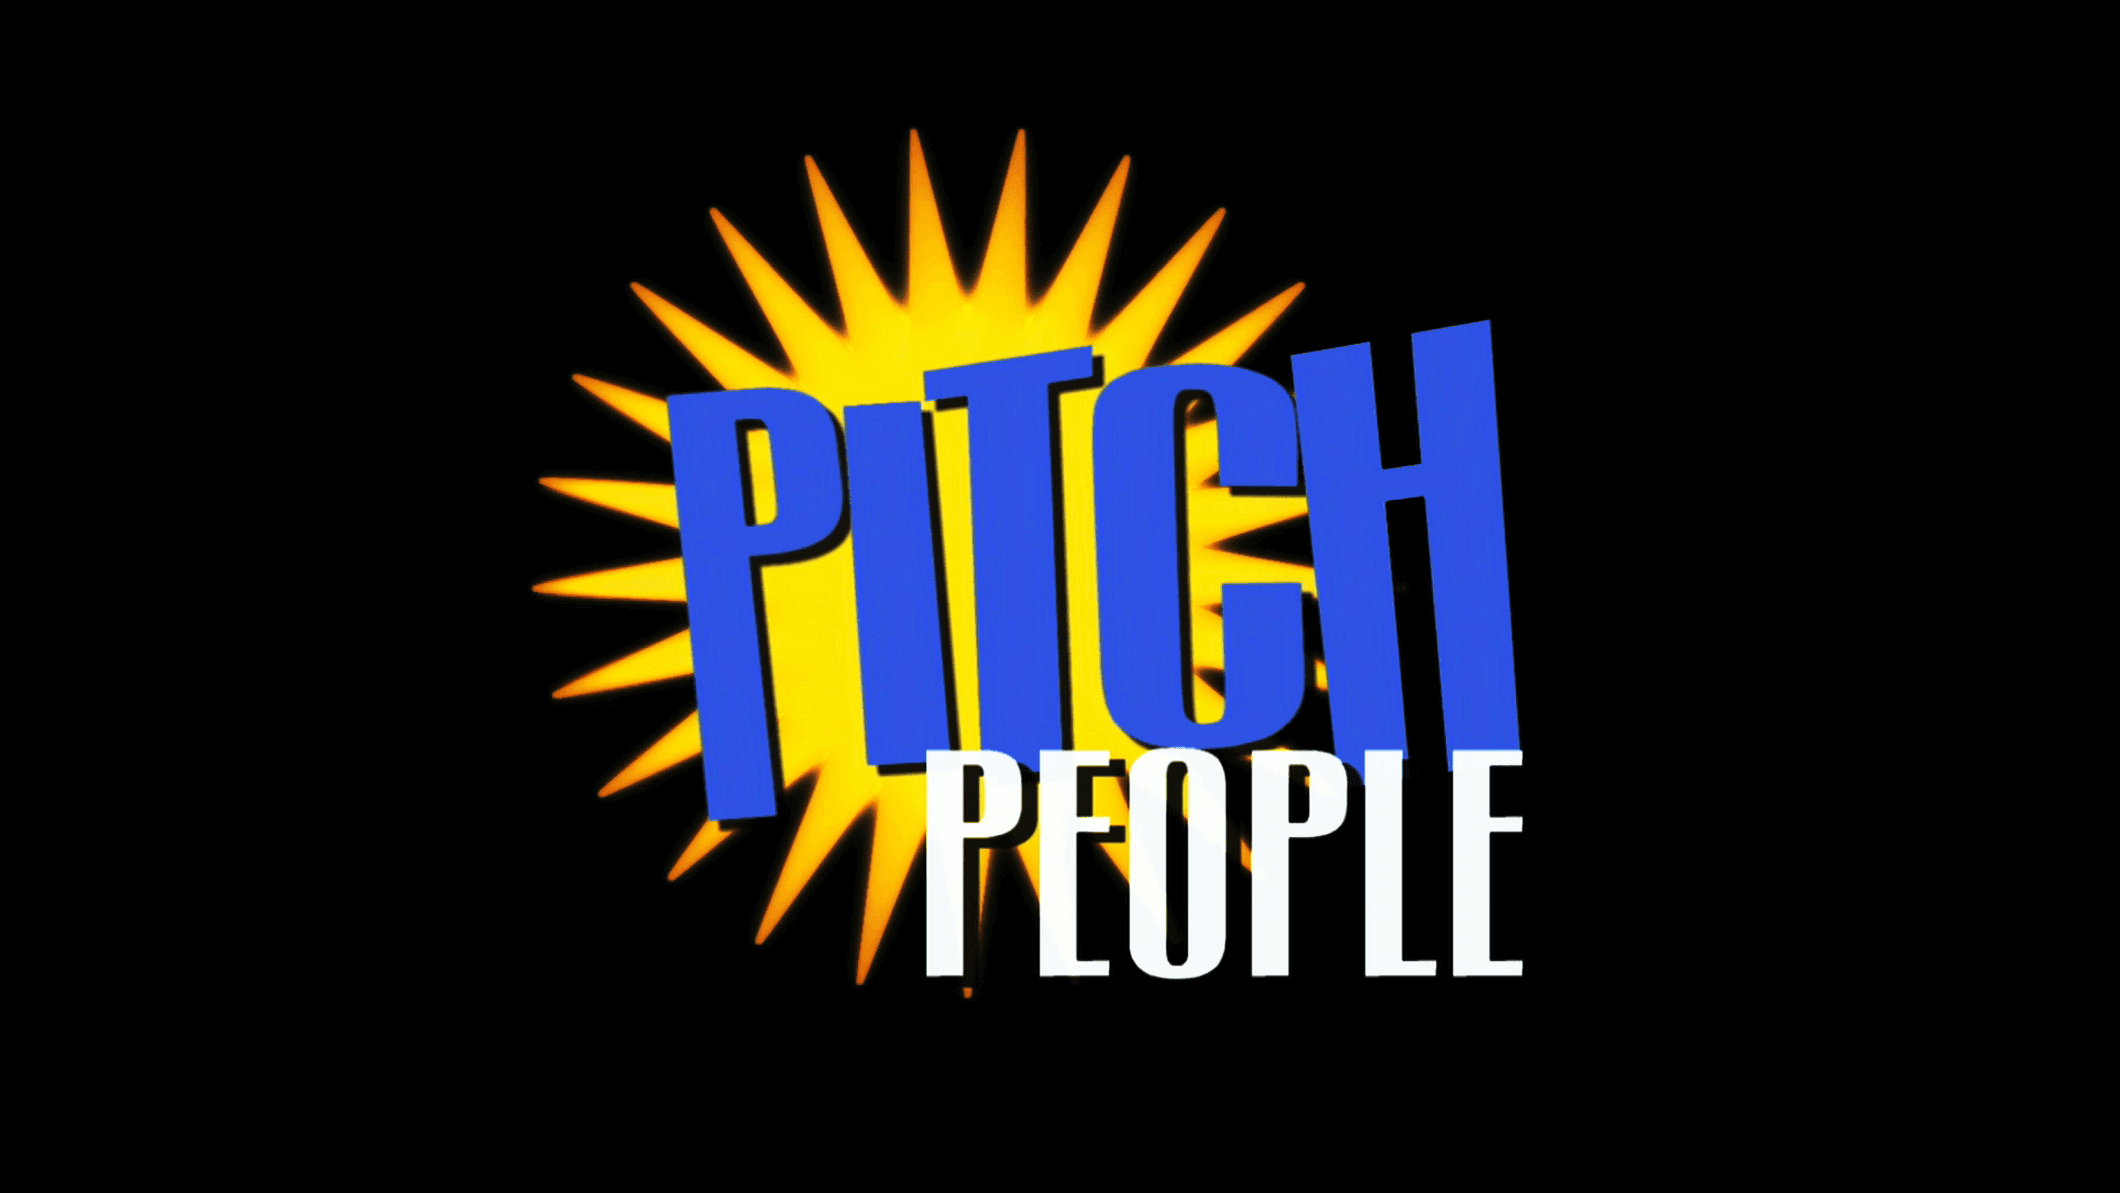 Pitch People logo